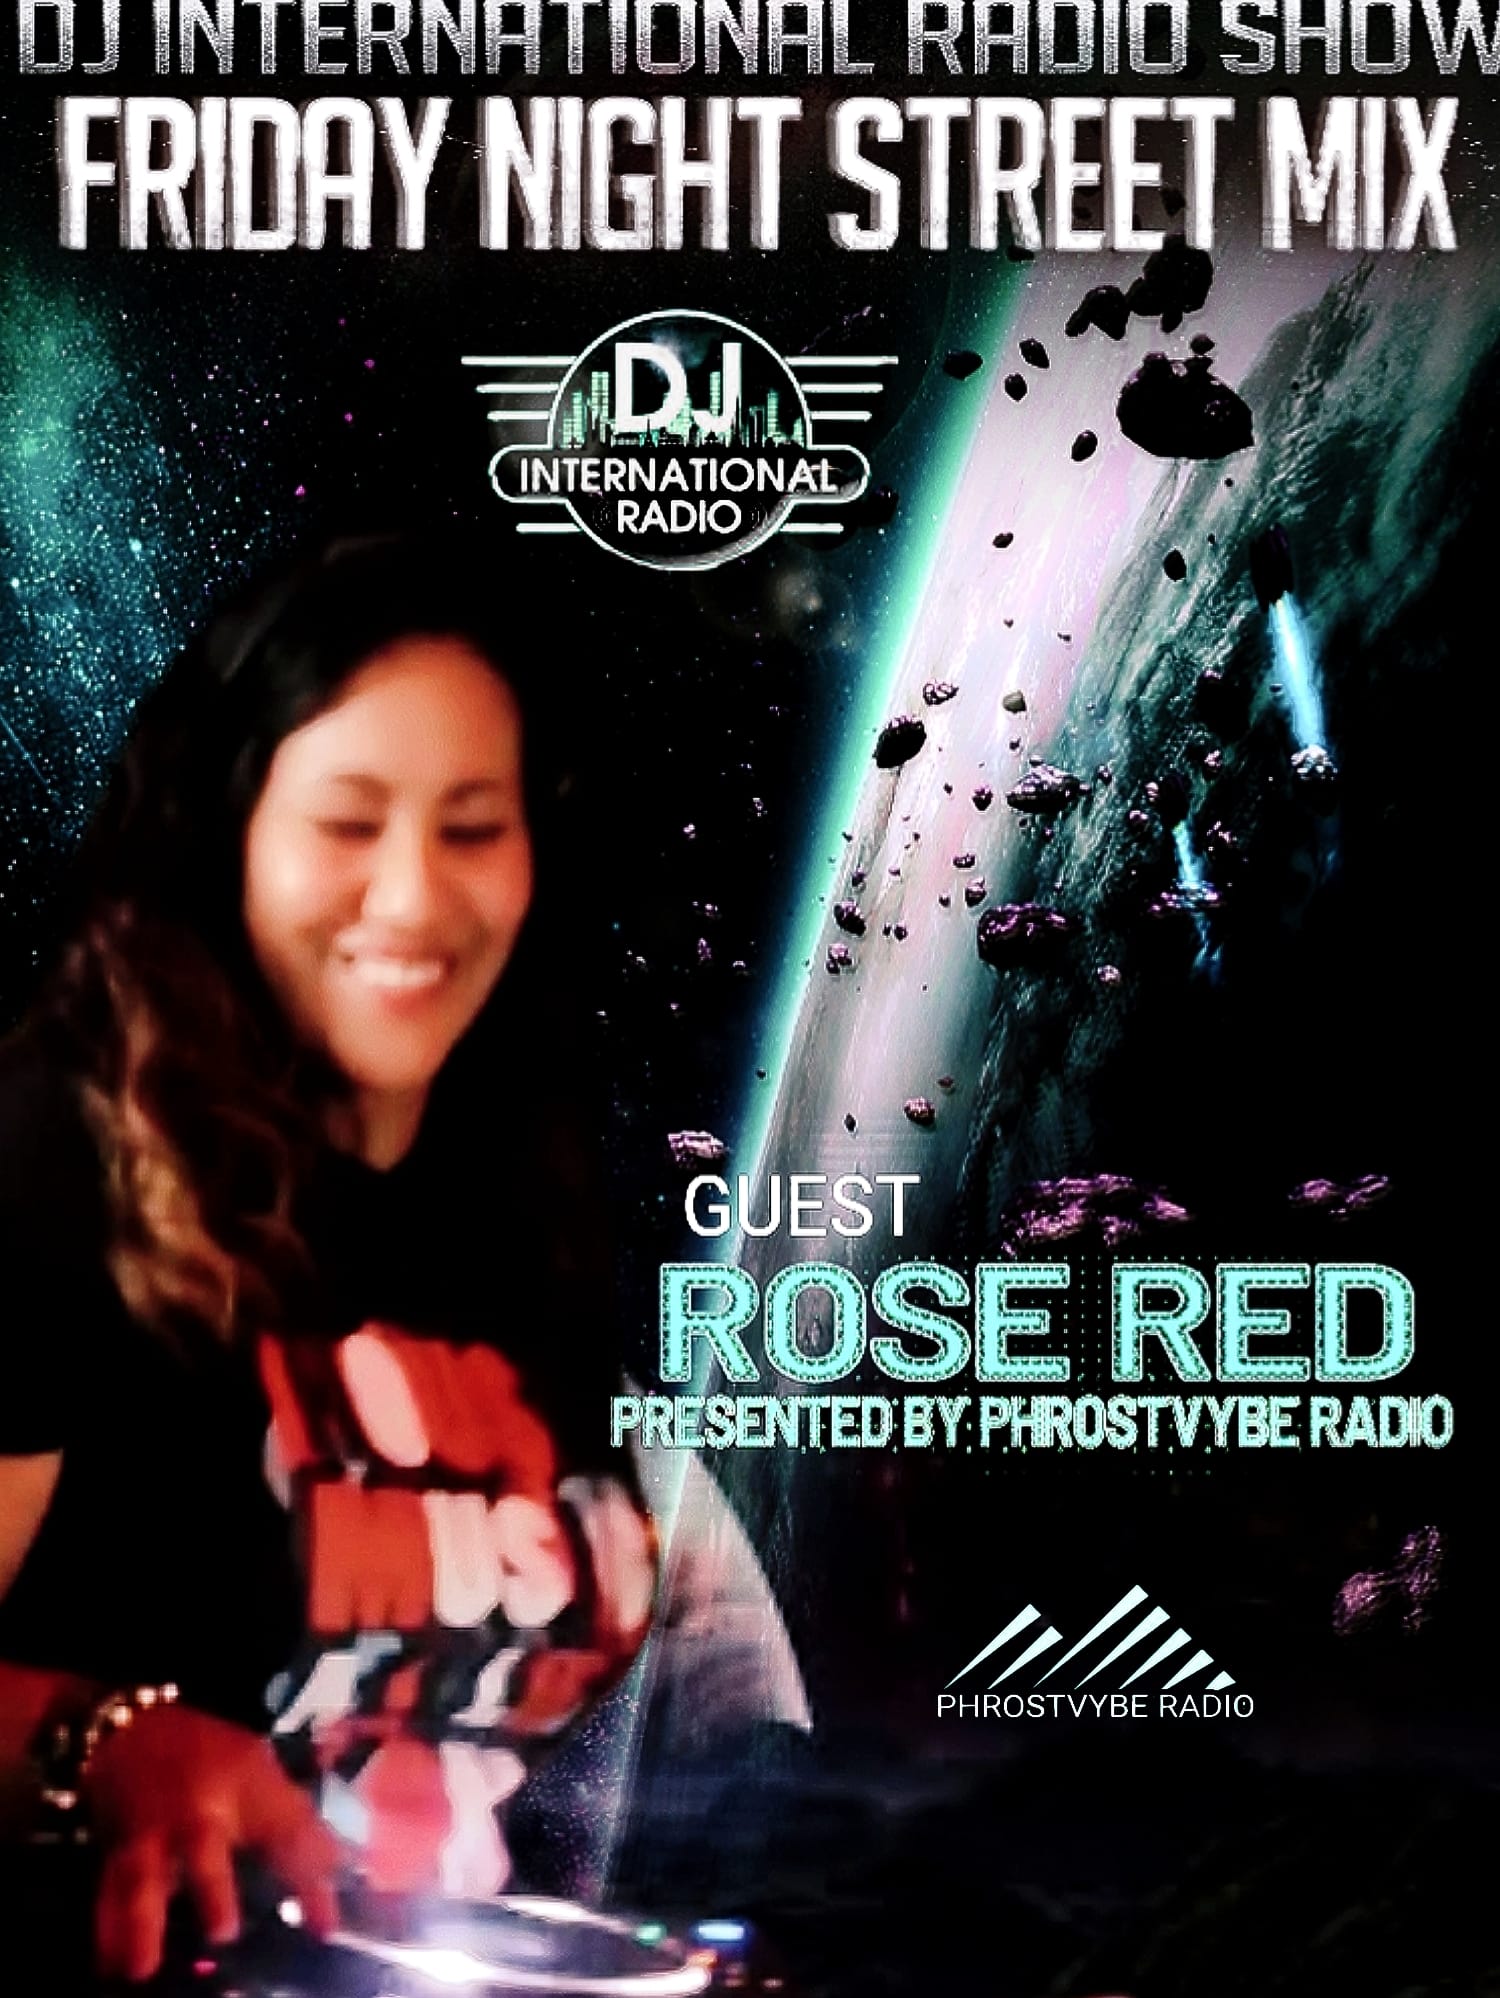 Art for RoseRed - Phrostvybe Radio Mix March 25 2 by ROSE REDD